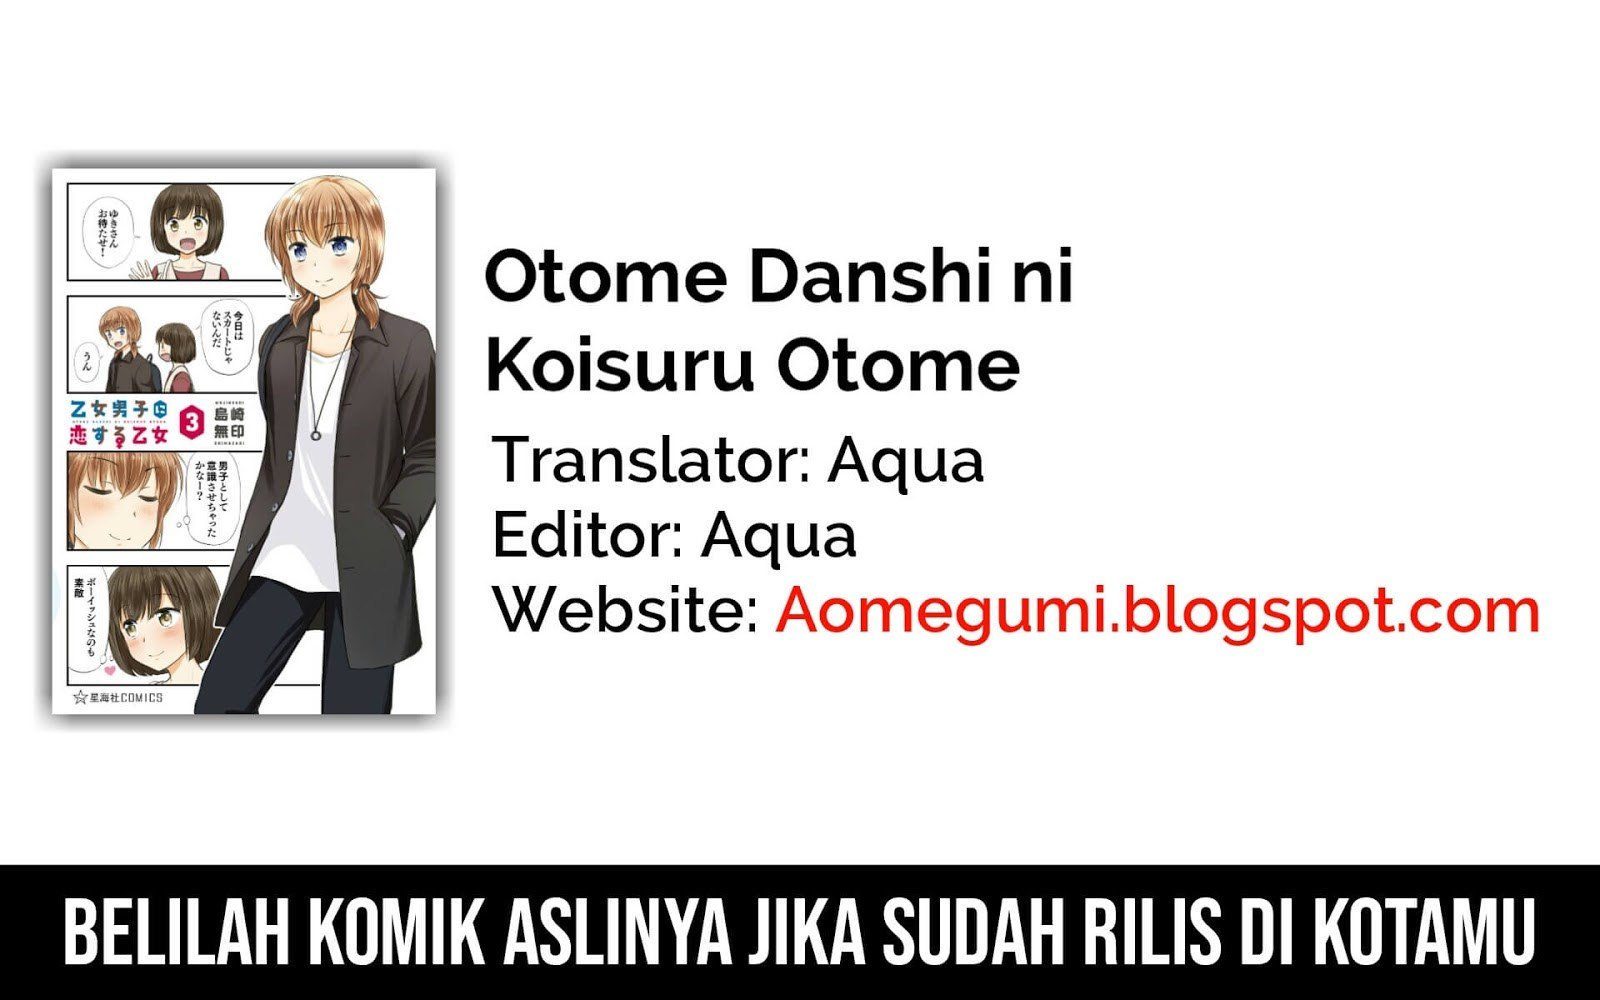 Otome Danshi ni Koisuru Otome Chapter 26-30